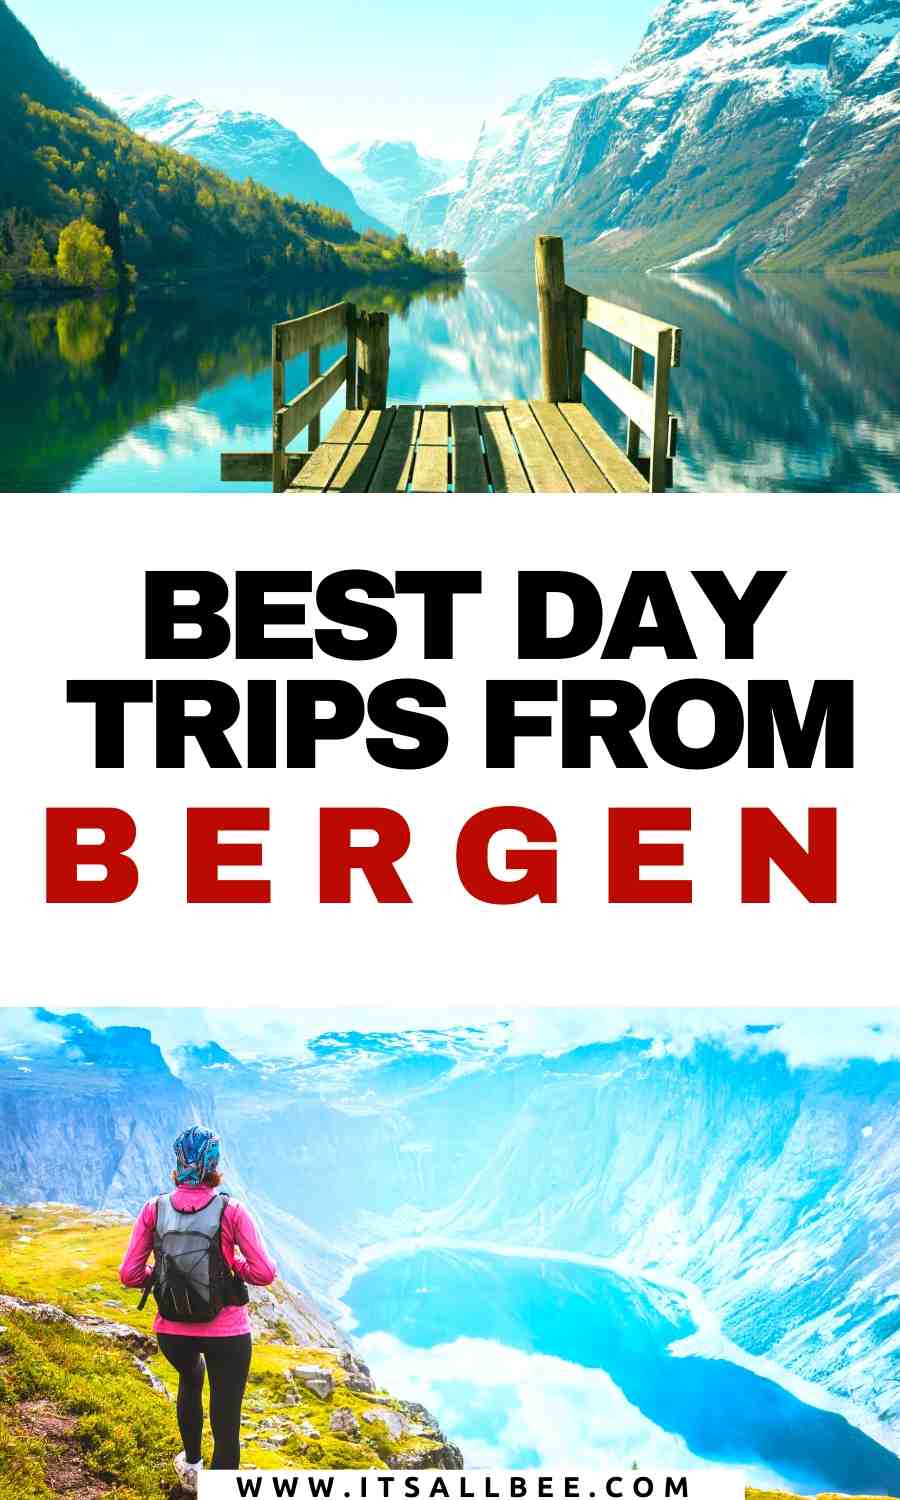 where is bergen located | bergen hiking | norway villages